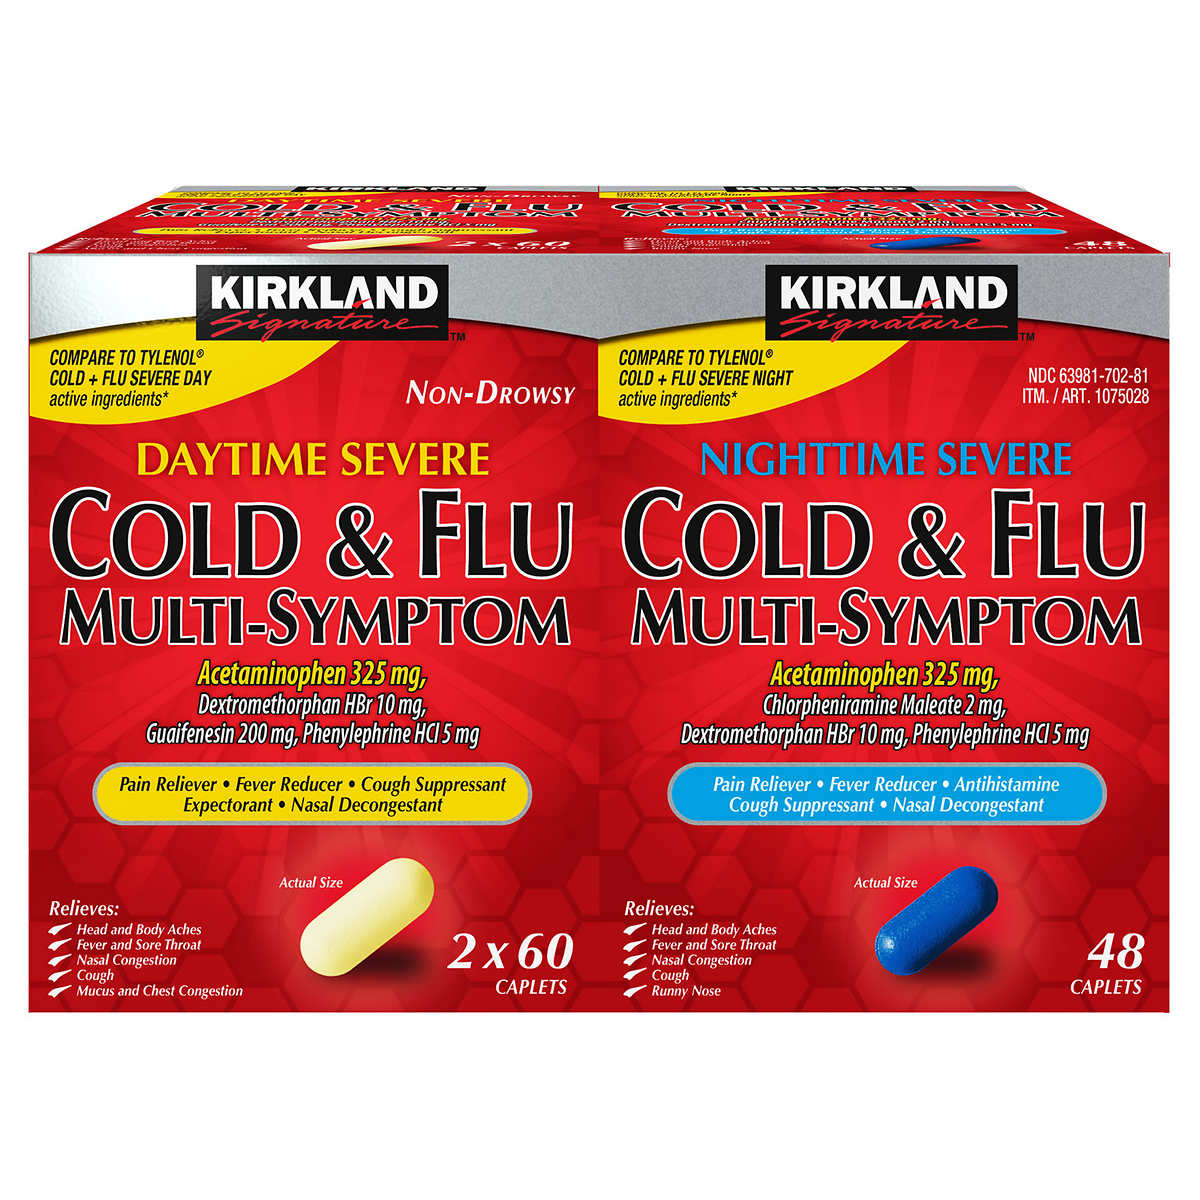 Does tylenol cold and flu severe night make you sleepy Kirkland Signature Severe Cold Flu Multi Symptom Caplets 168 Caplets Costco